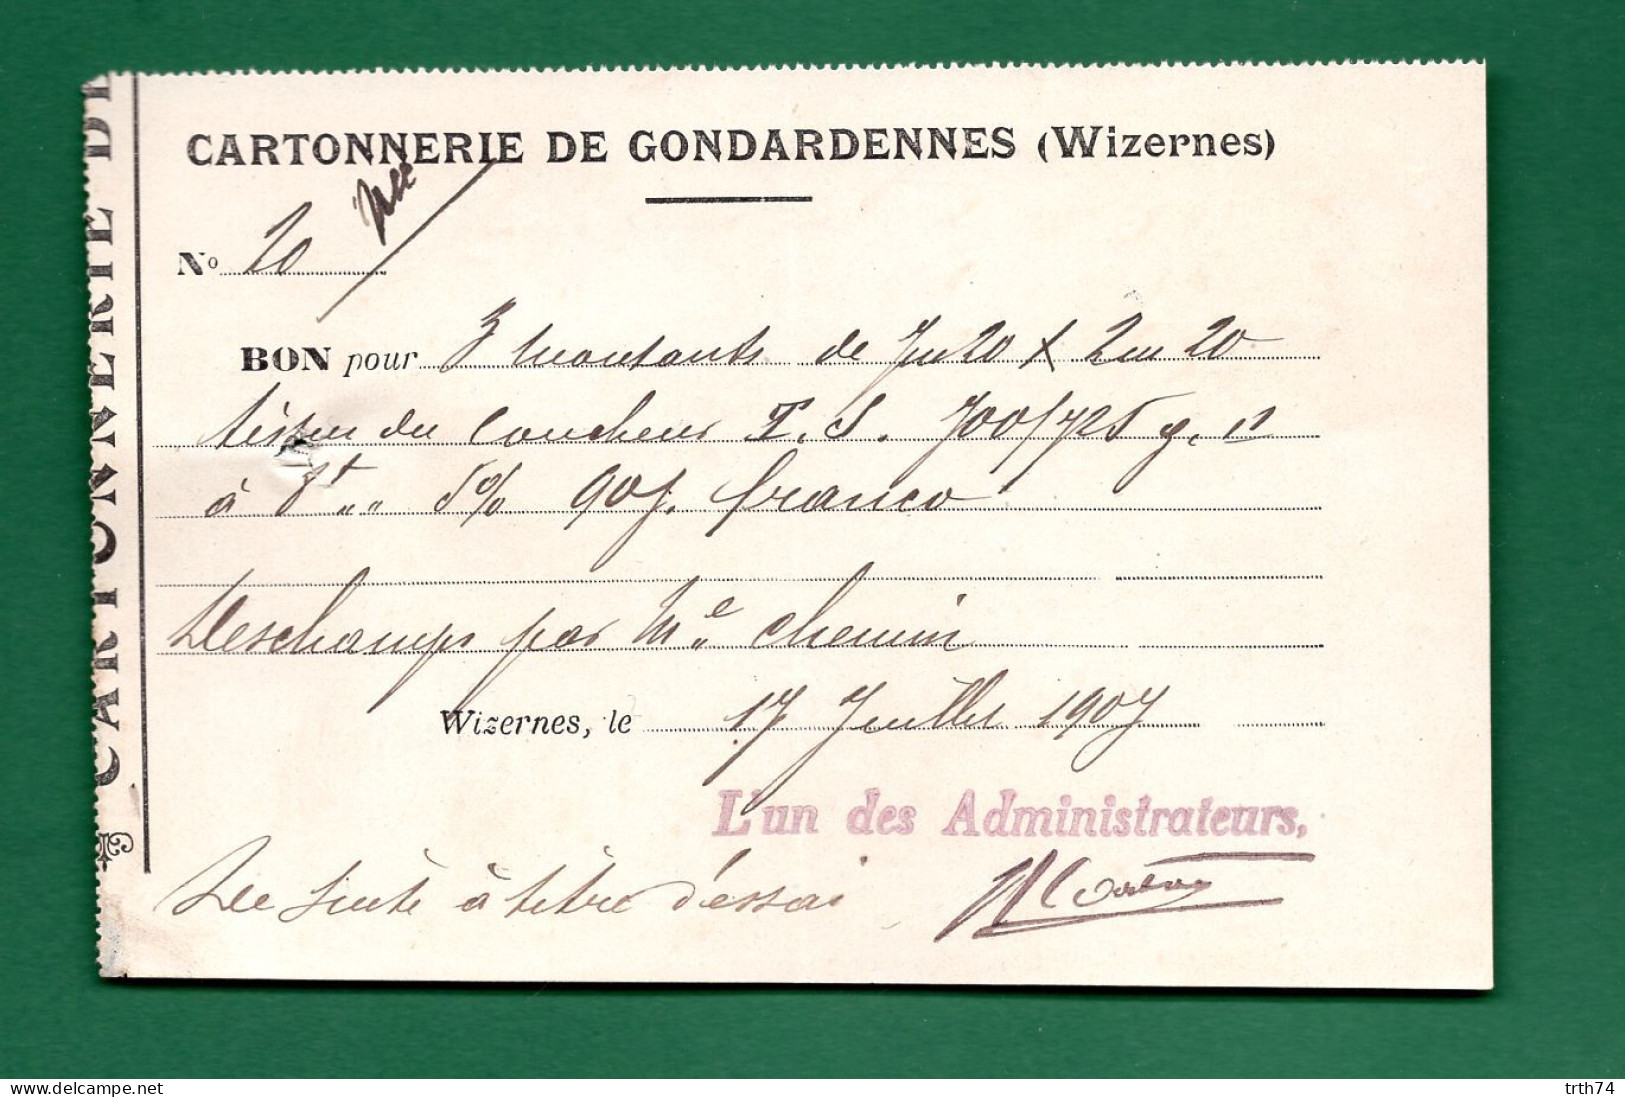 62 Wizernes Cartonnerie De Gondardennes 17 Juillet 1907 - Printing & Stationeries